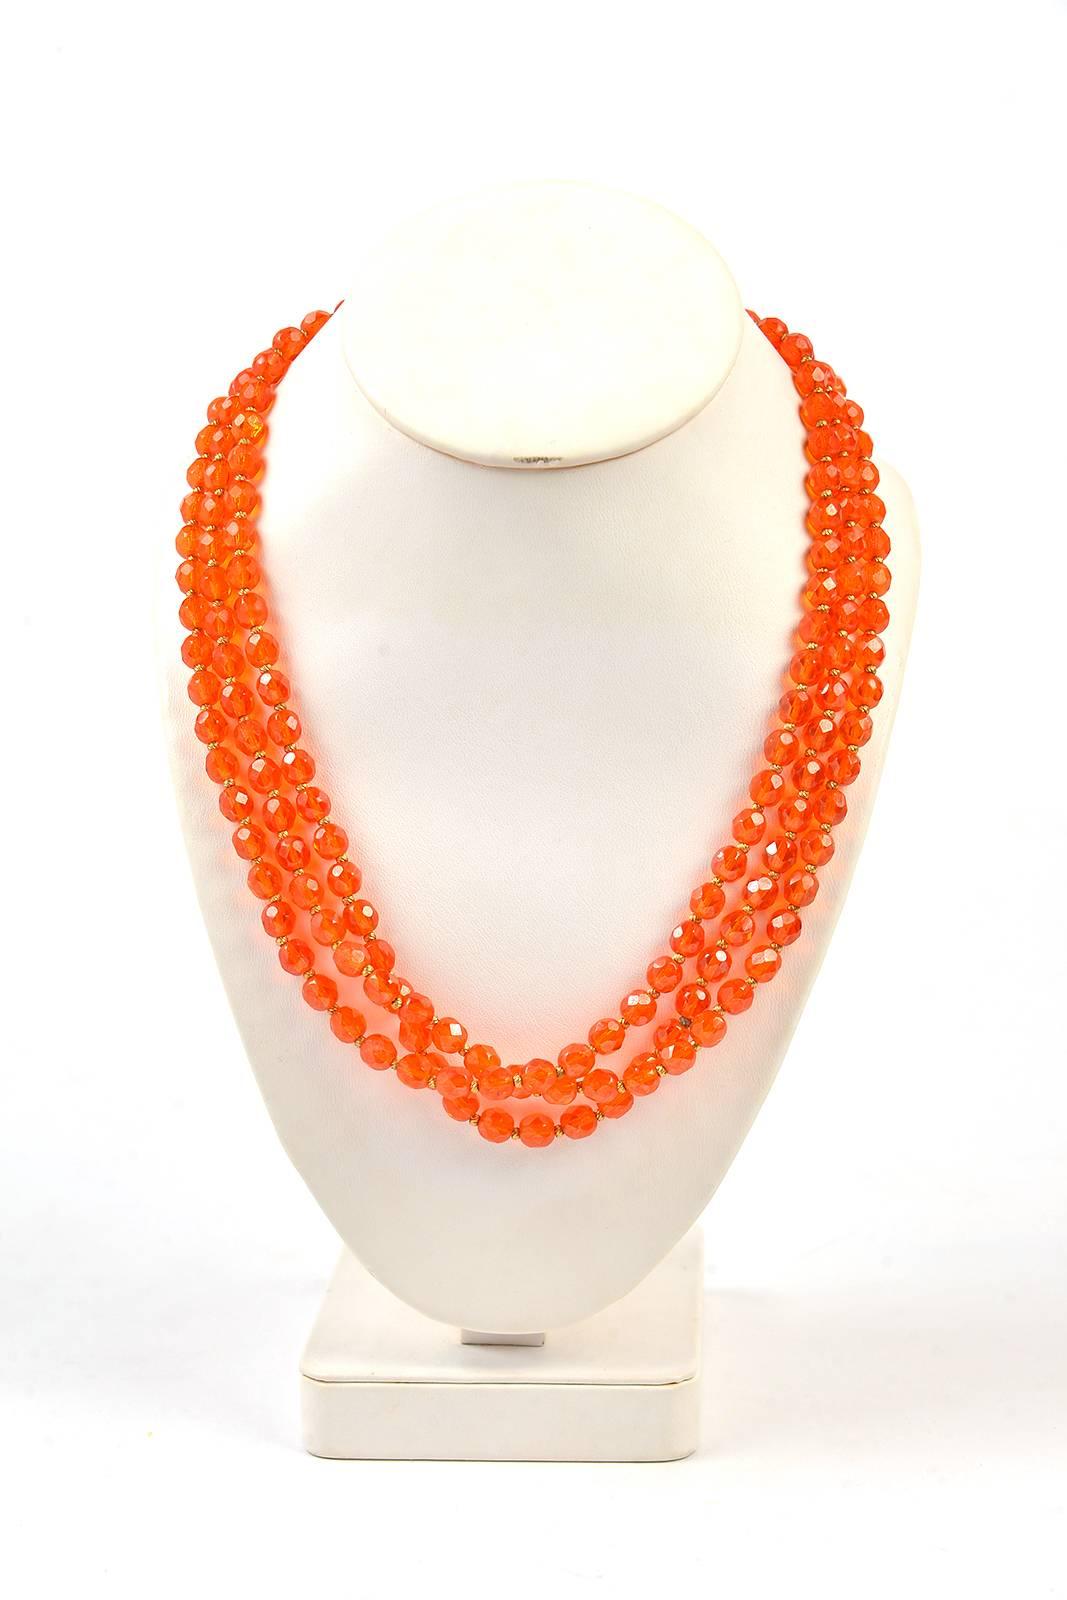 1960s Hattie Carnegie Tangerine Glass Bead Necklace and Earrings For Sale 1